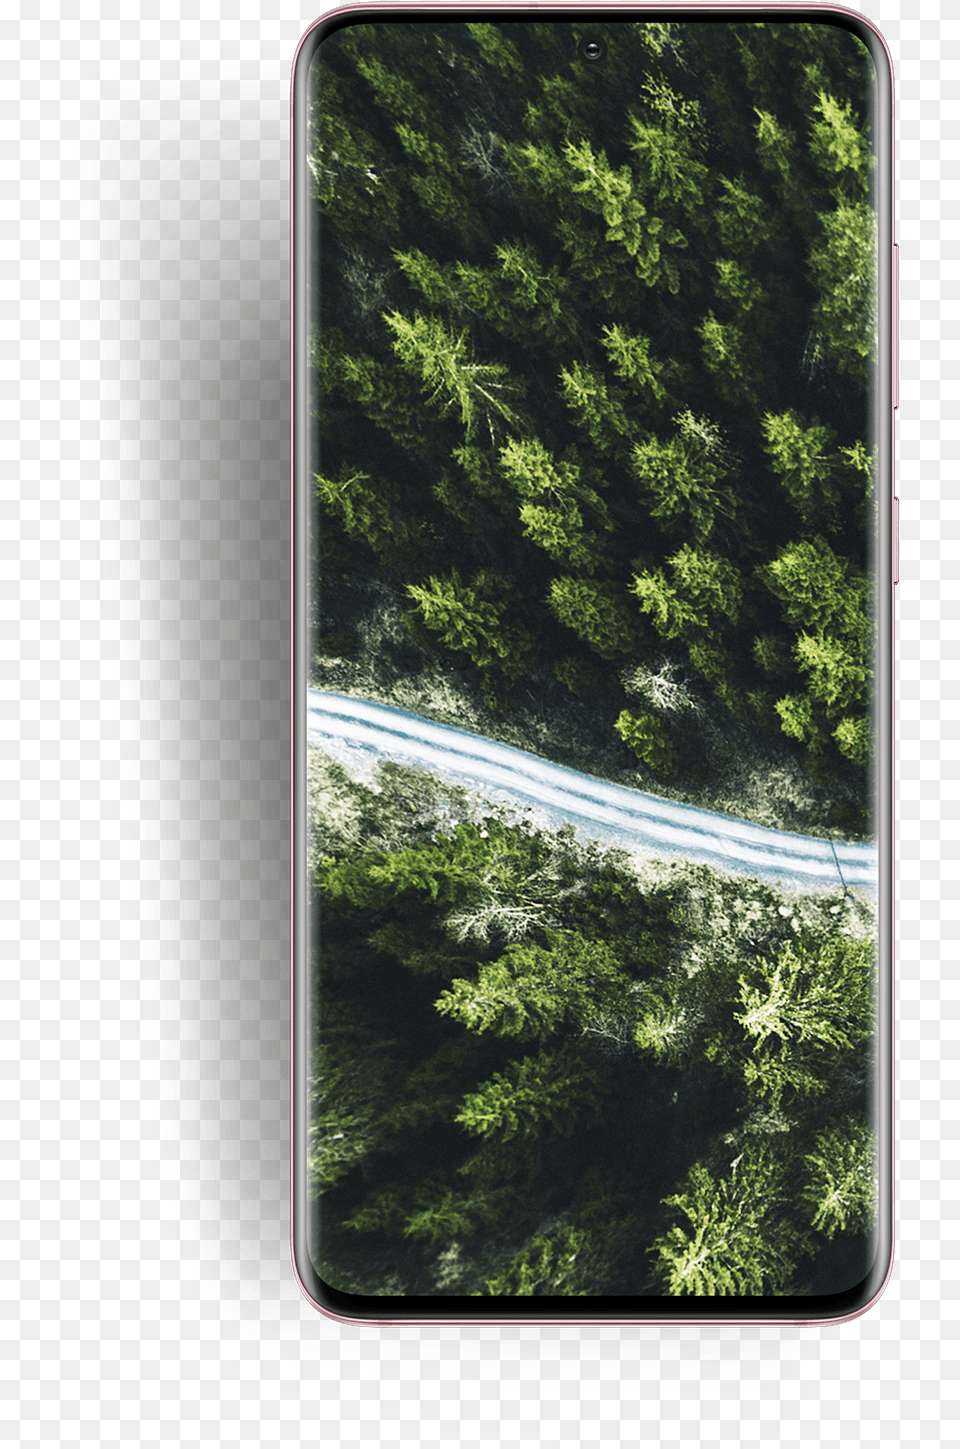 Design Samsung Galaxy S20 U0026 Ultra The Official Samsung Galaxy S20, Woodland, Vegetation, Tree, Rainforest Free Png